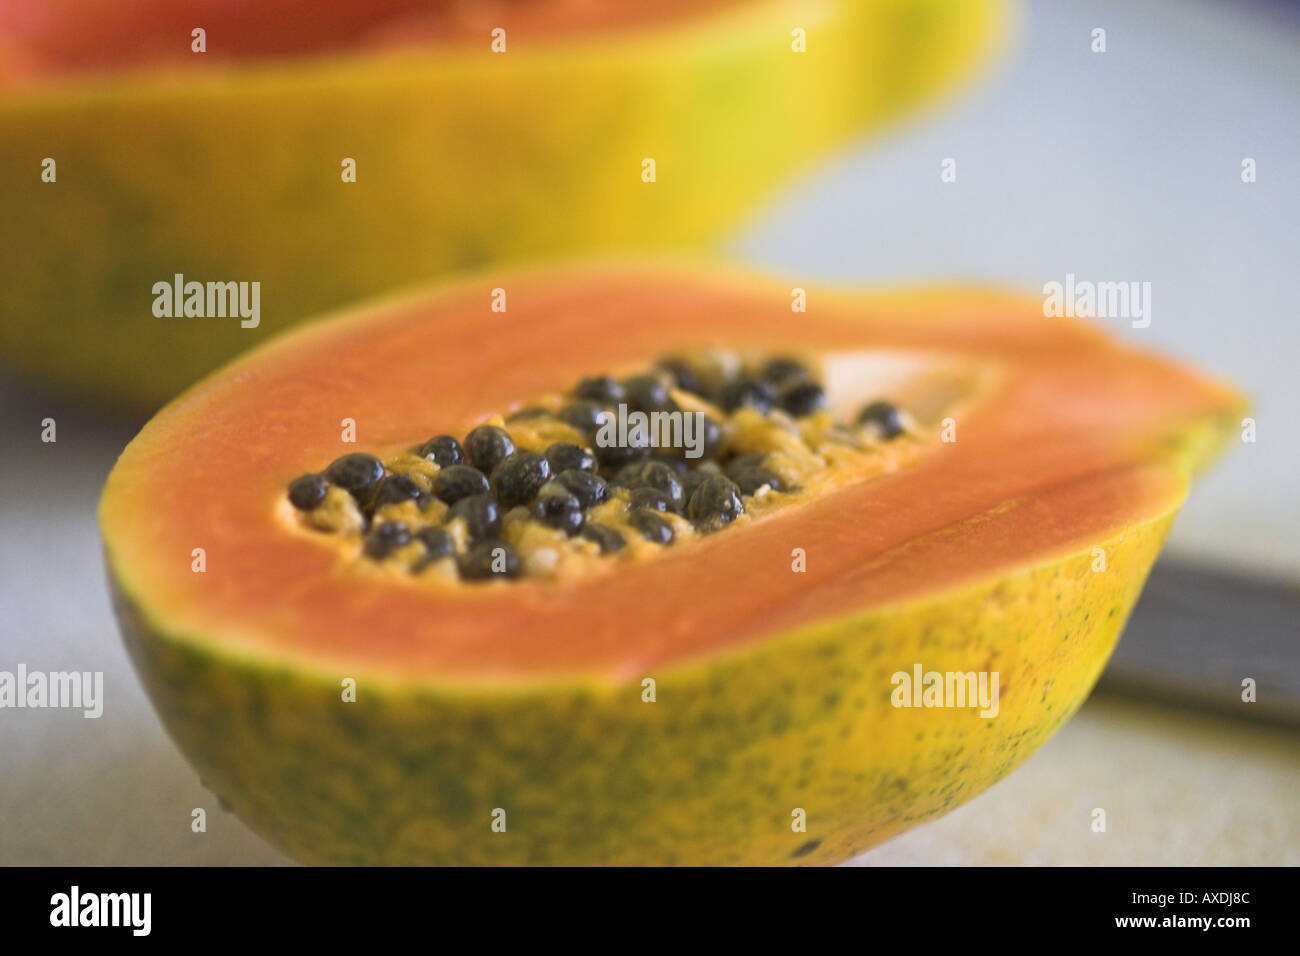 Papaya and Seeds: A freshly halved papaya full of round black seeds Stock Photo